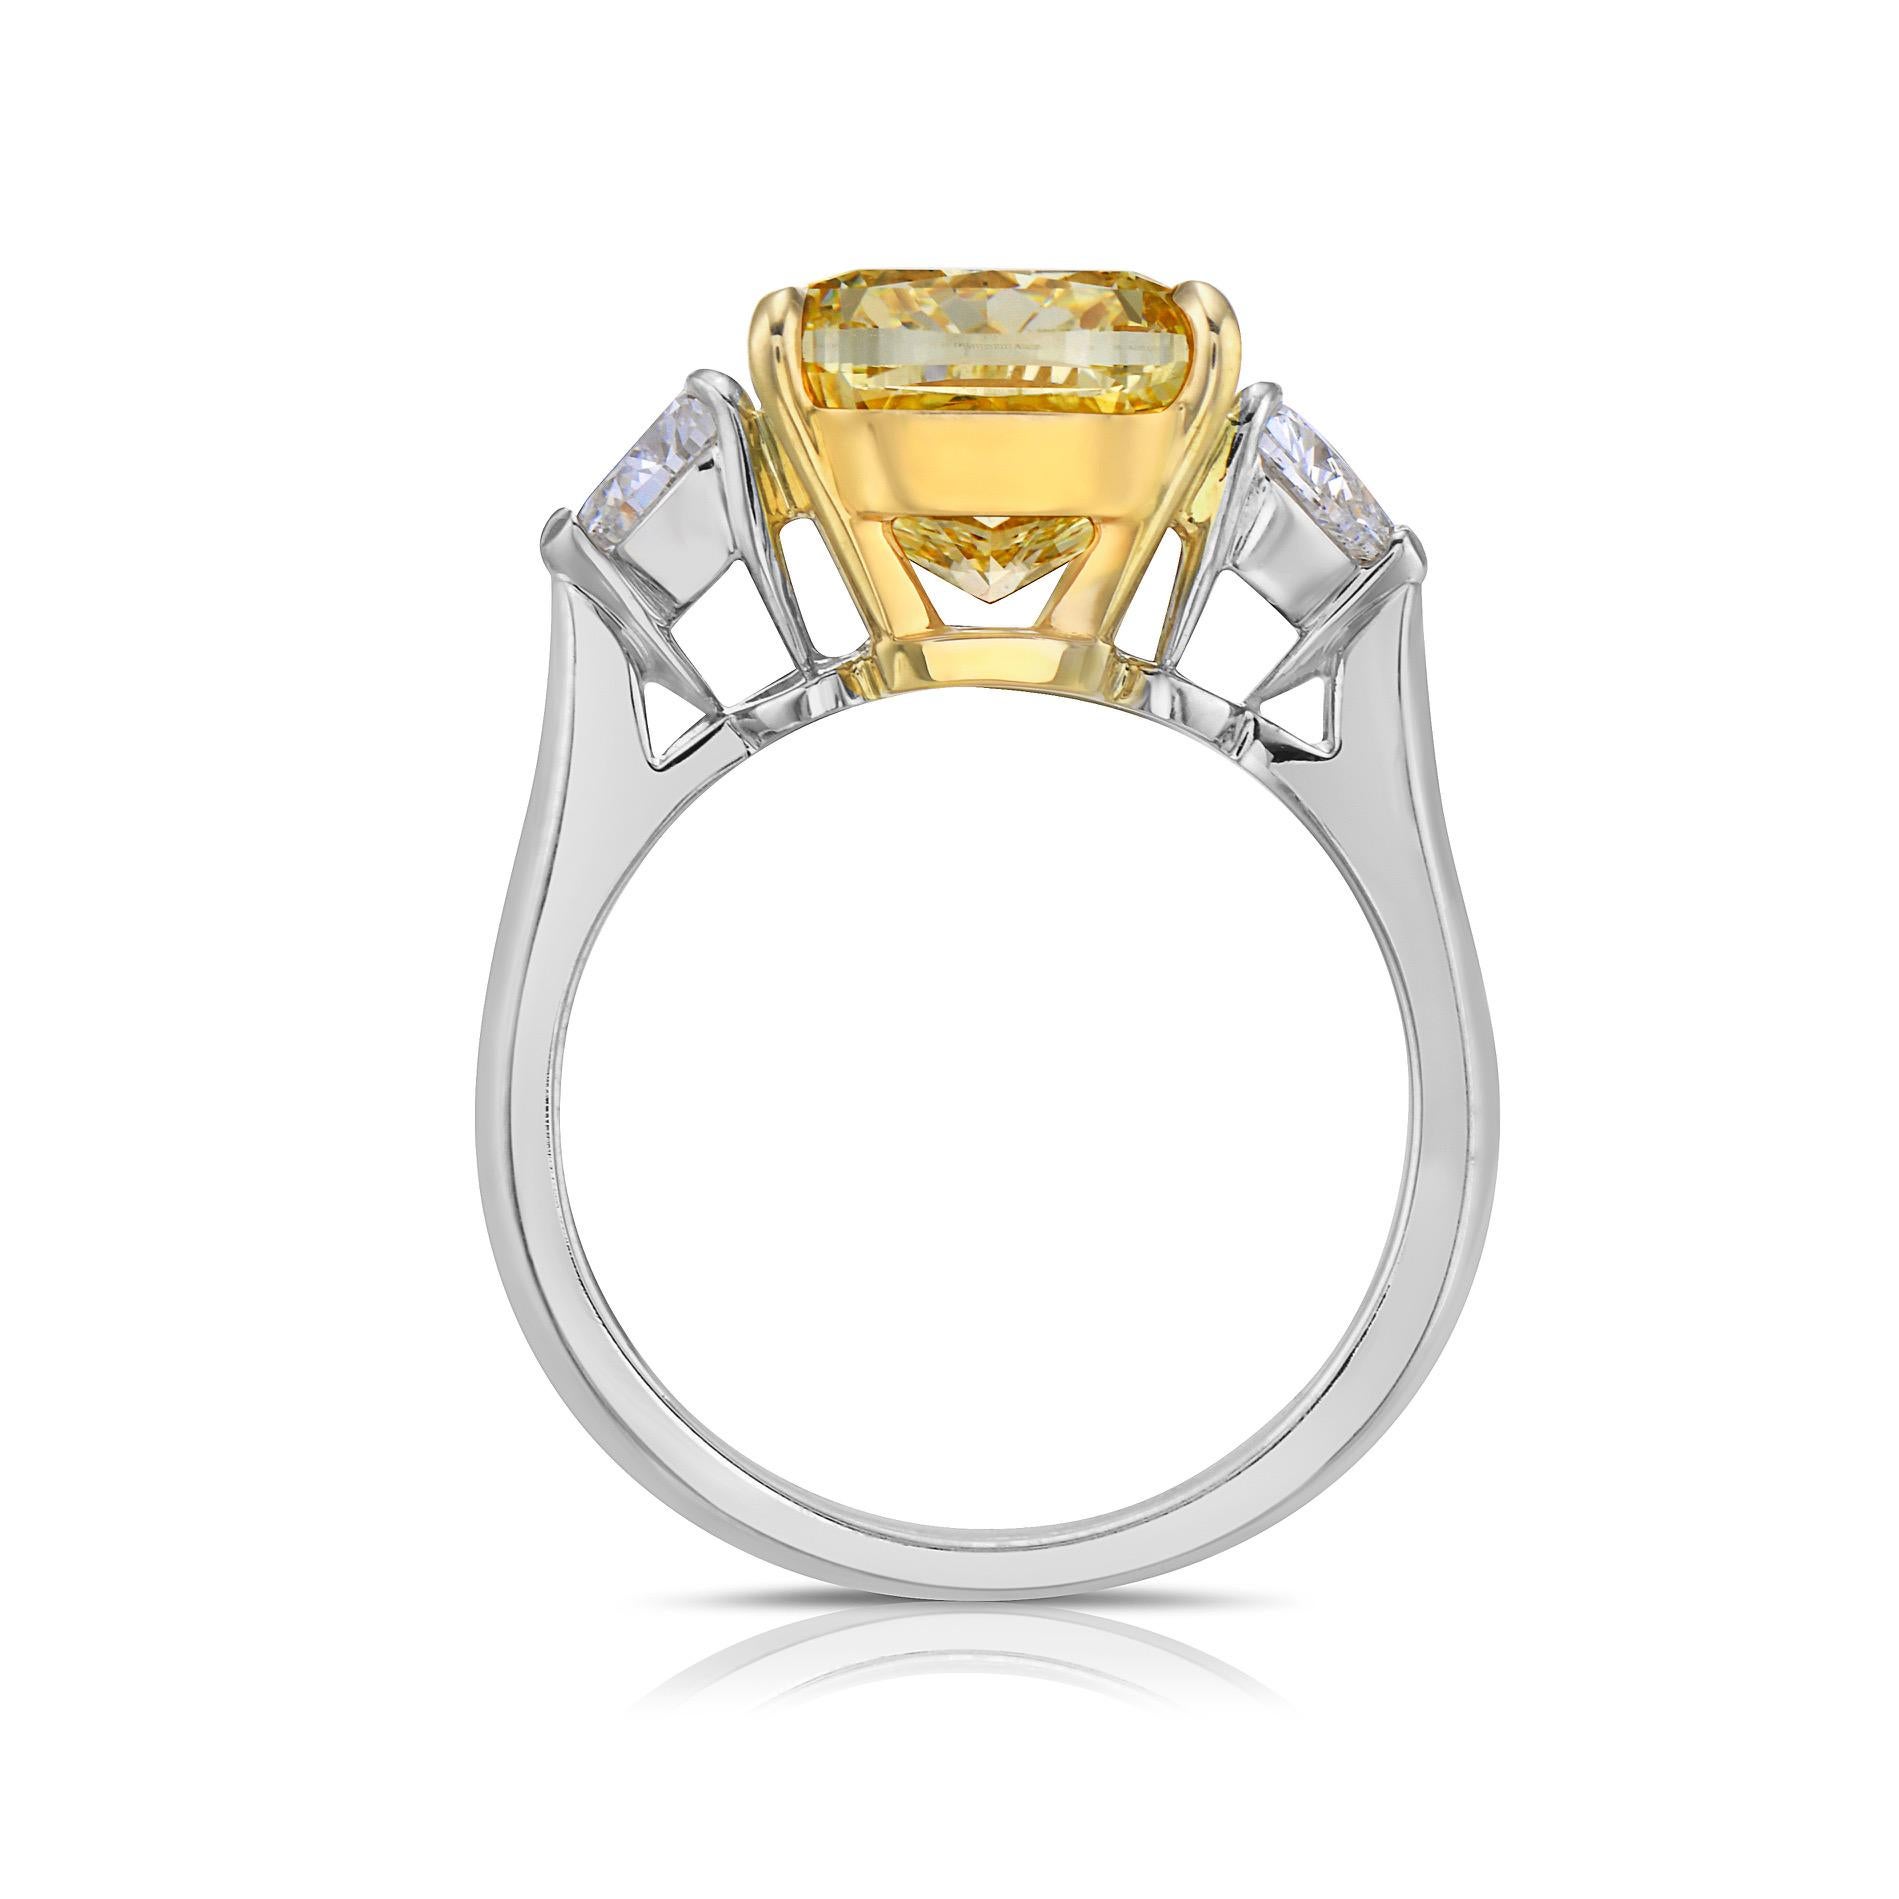 Cushion Cut Emilio Jewelry GIA Certified 6.75 Carat Fancy Intense Yellow Diamond Ring For Sale